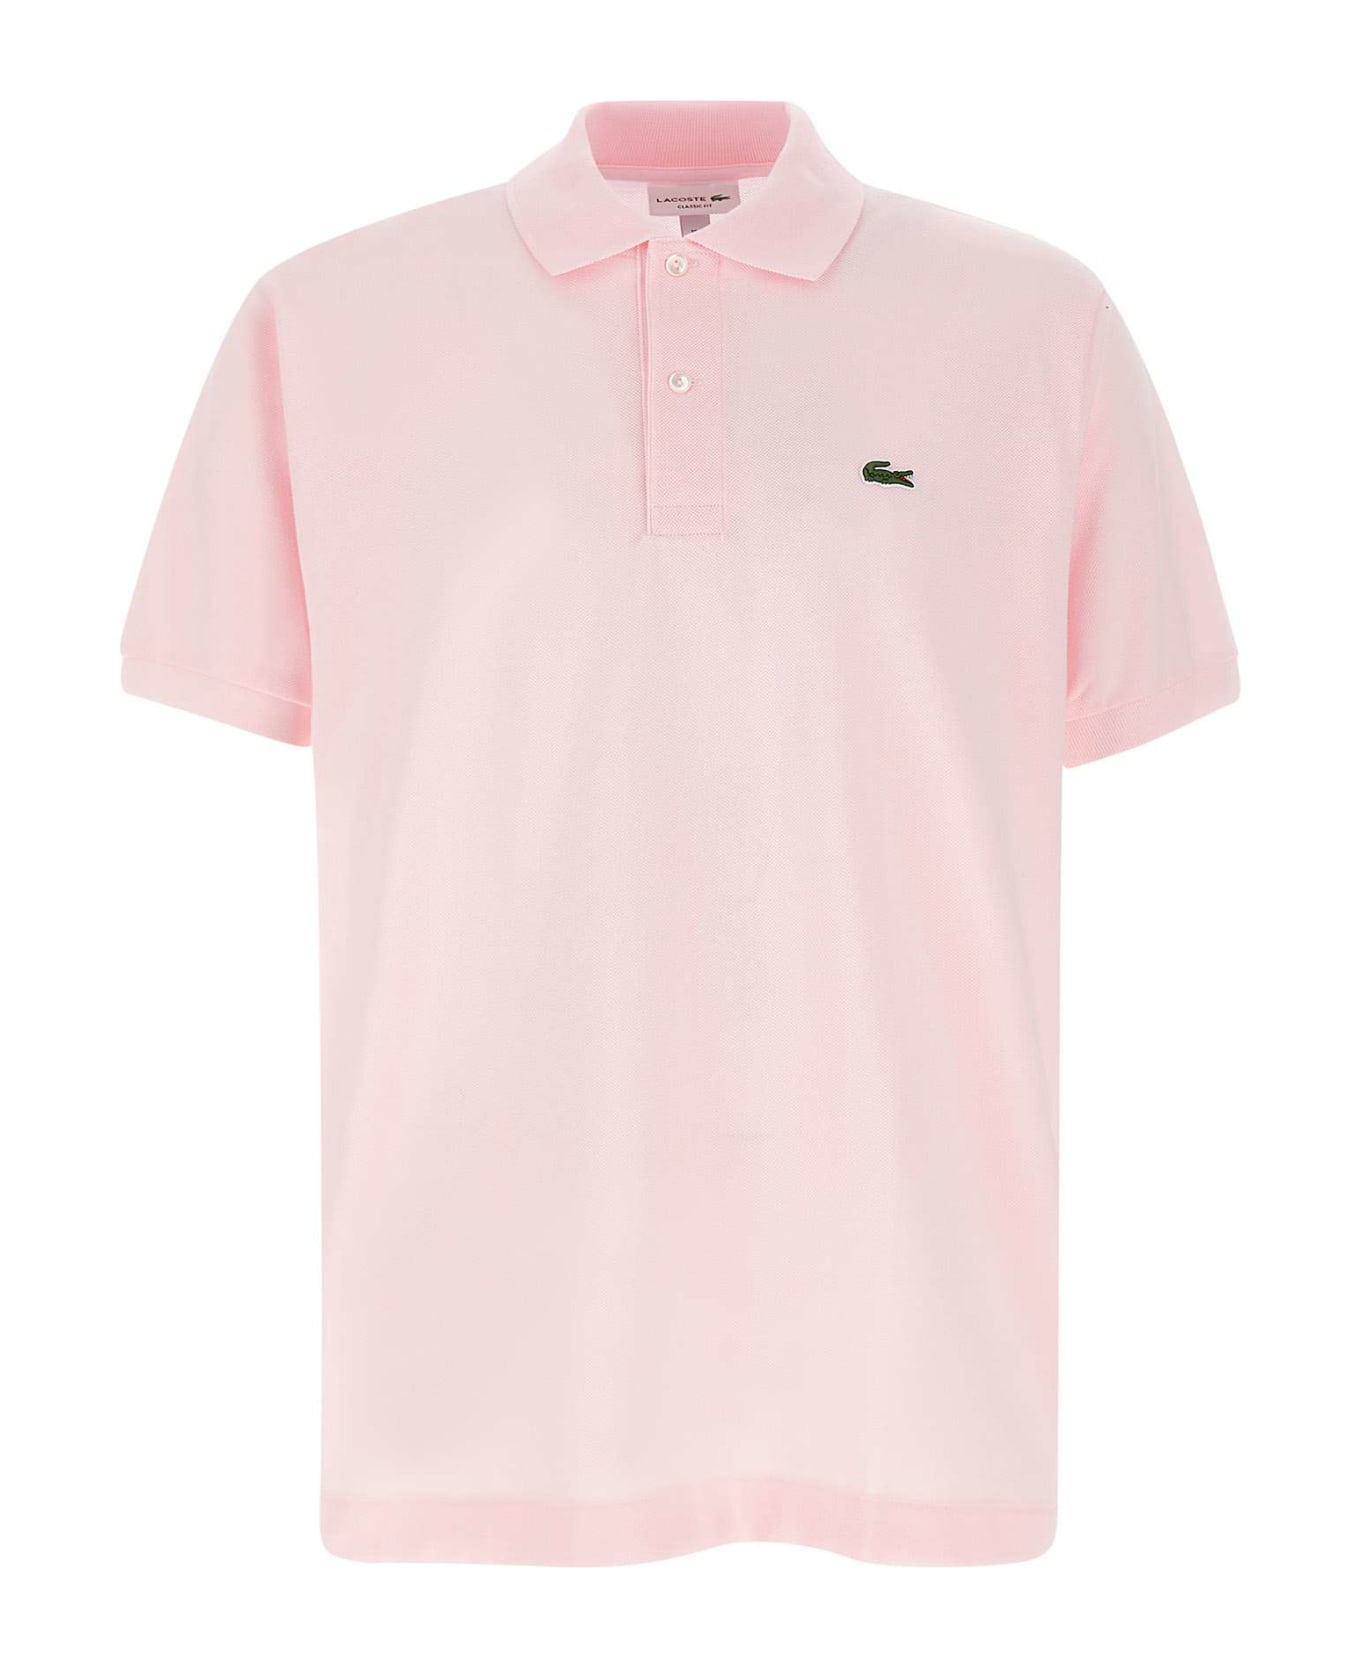 Lacoste Cotton Piquet Polo Shirt - PINK